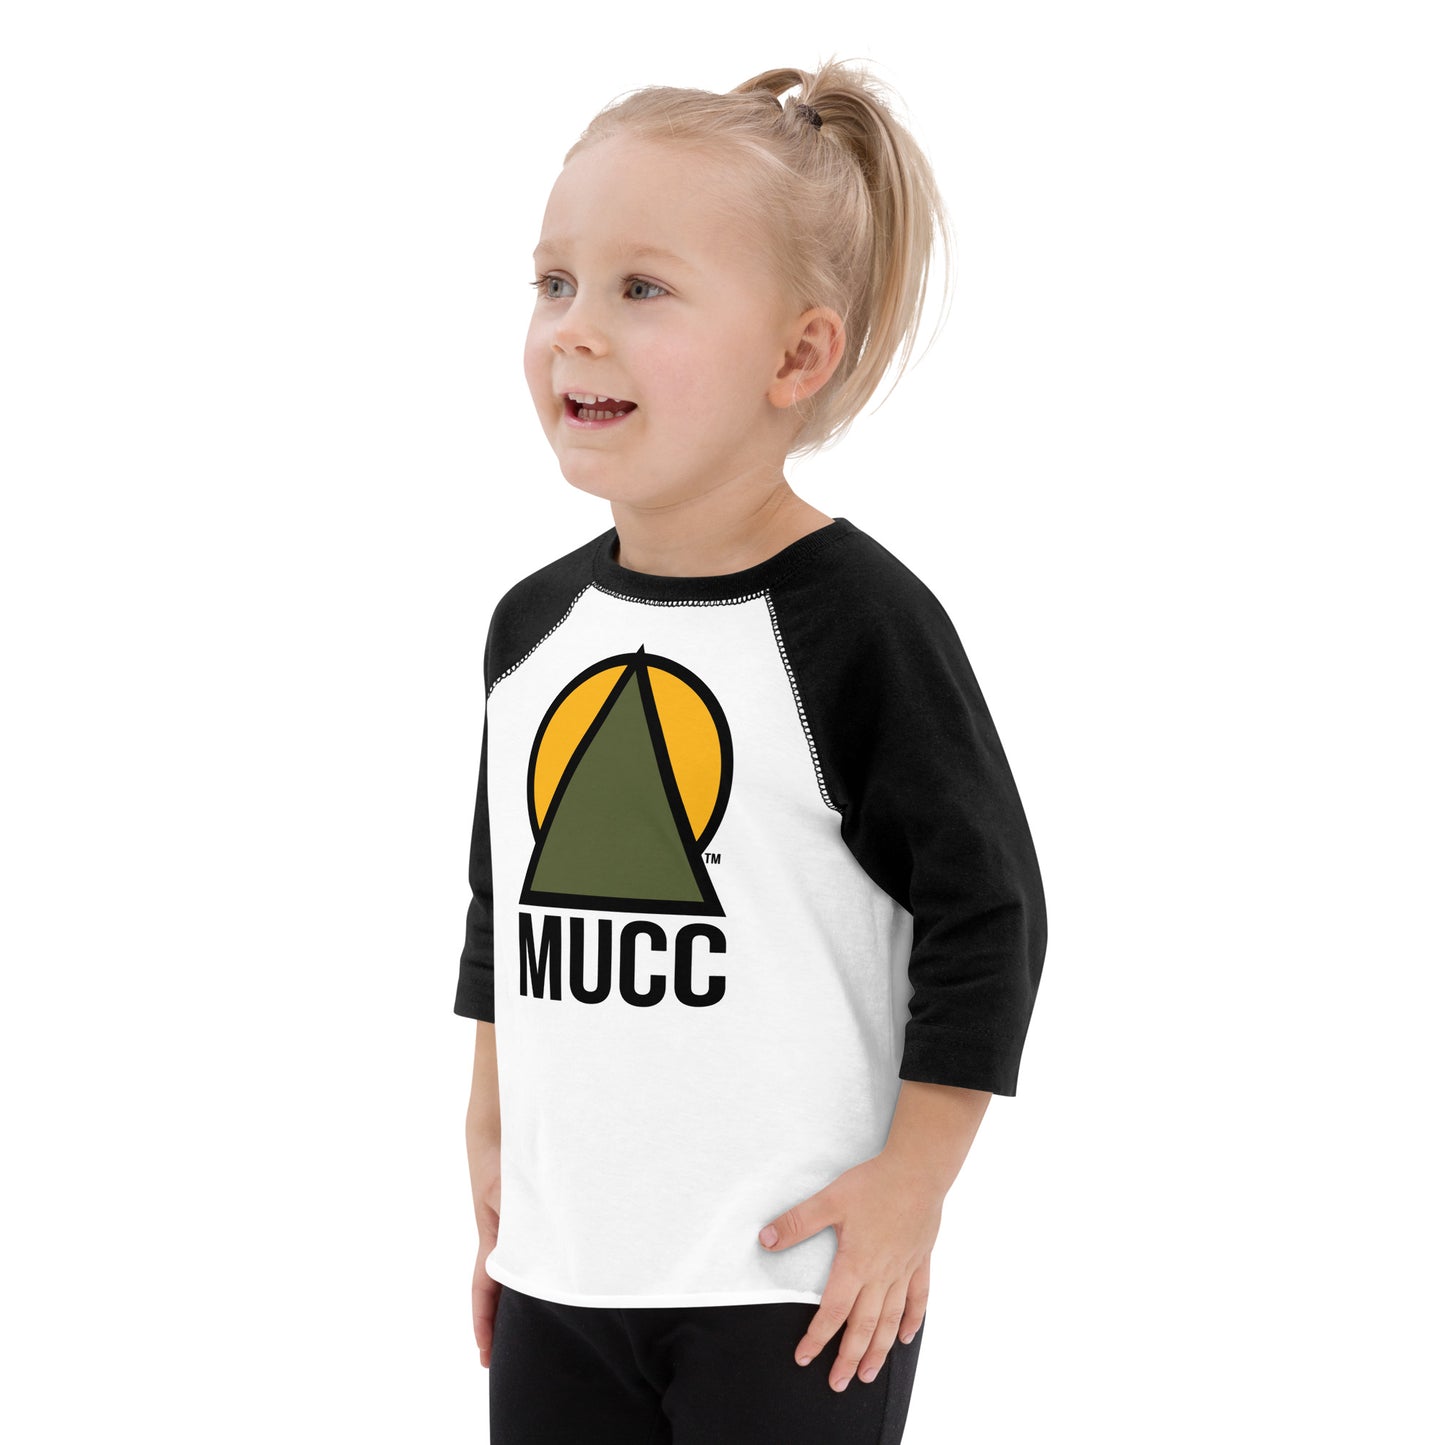 Toddler MUCC Baseball shirt